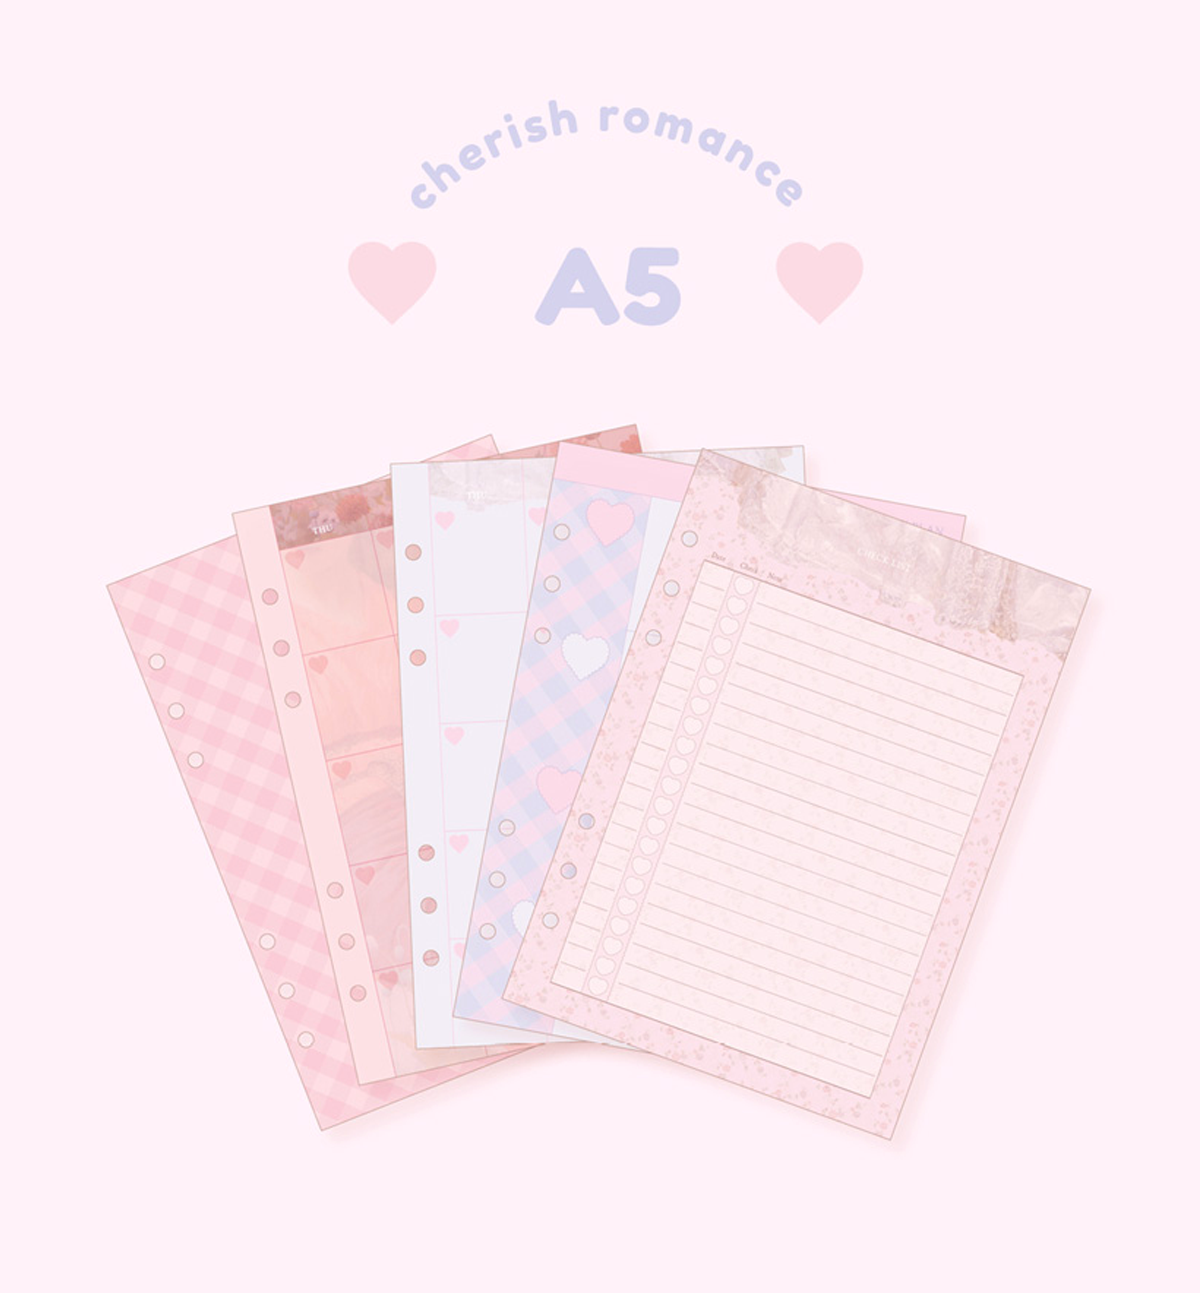 A5 Cherish Romance Paper Refill